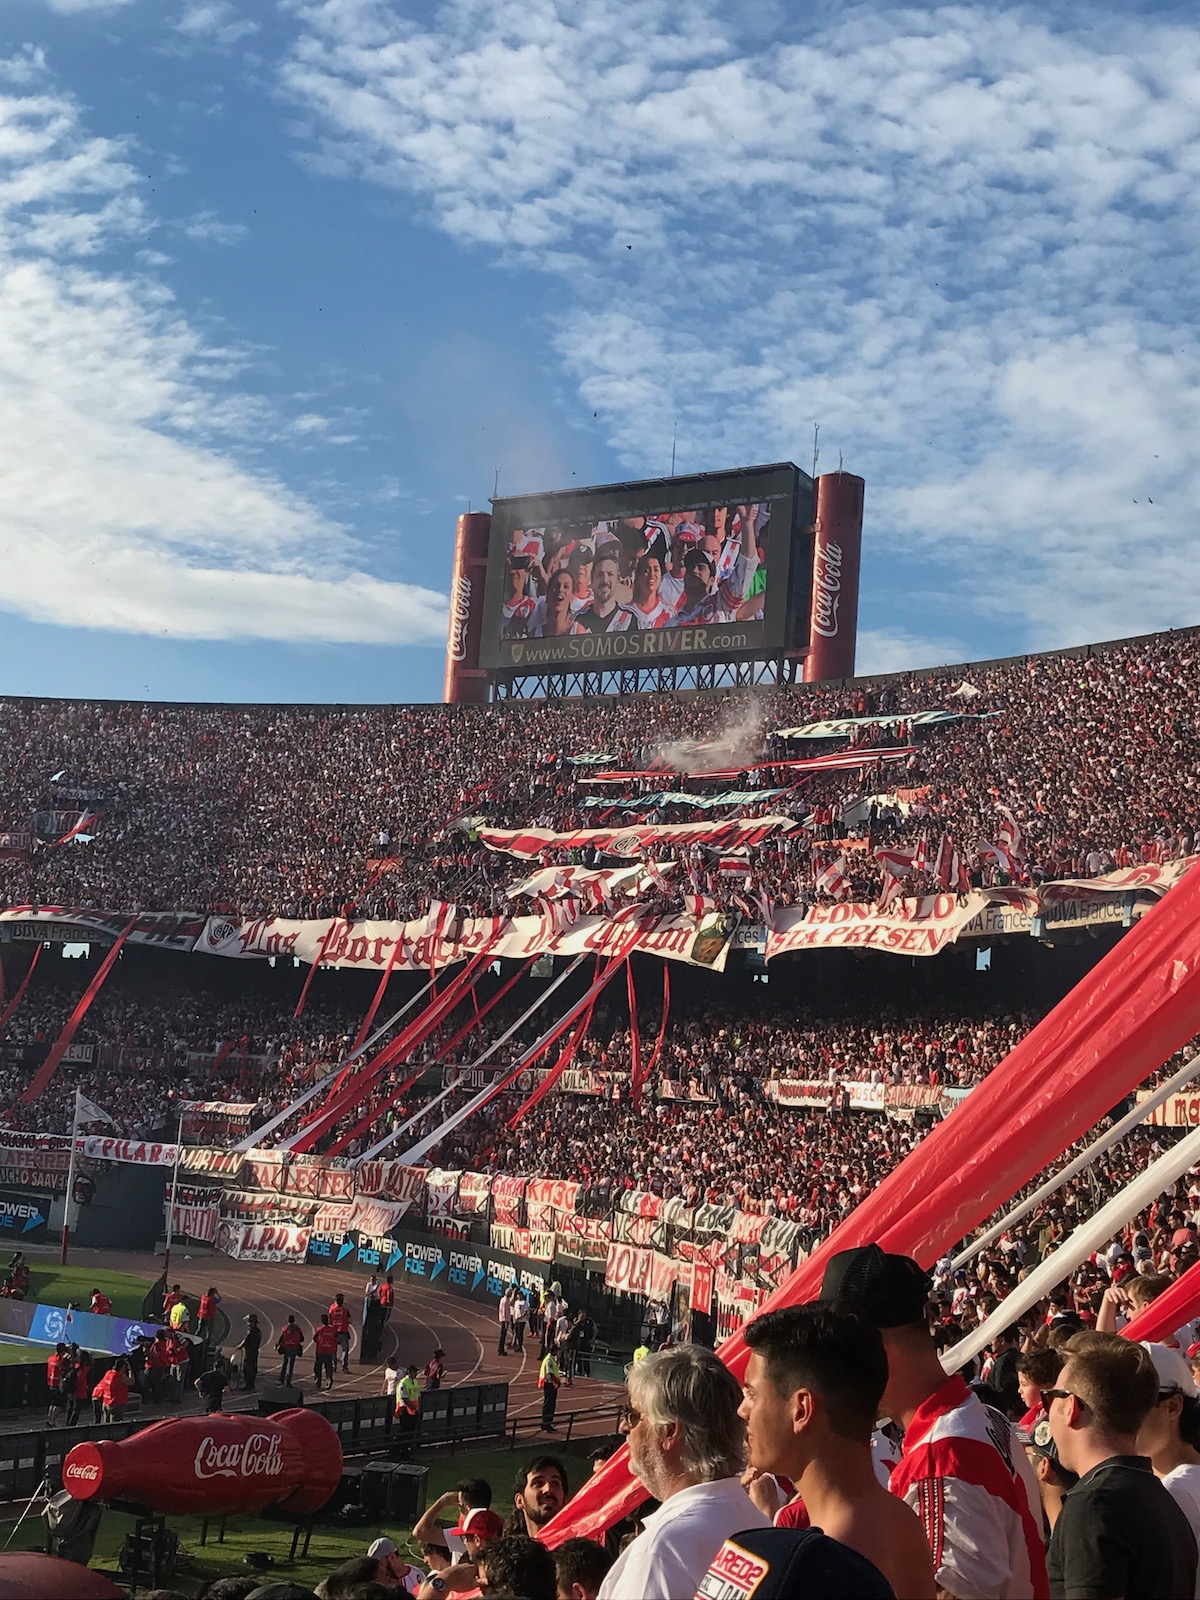 Estadio Monumental large screen